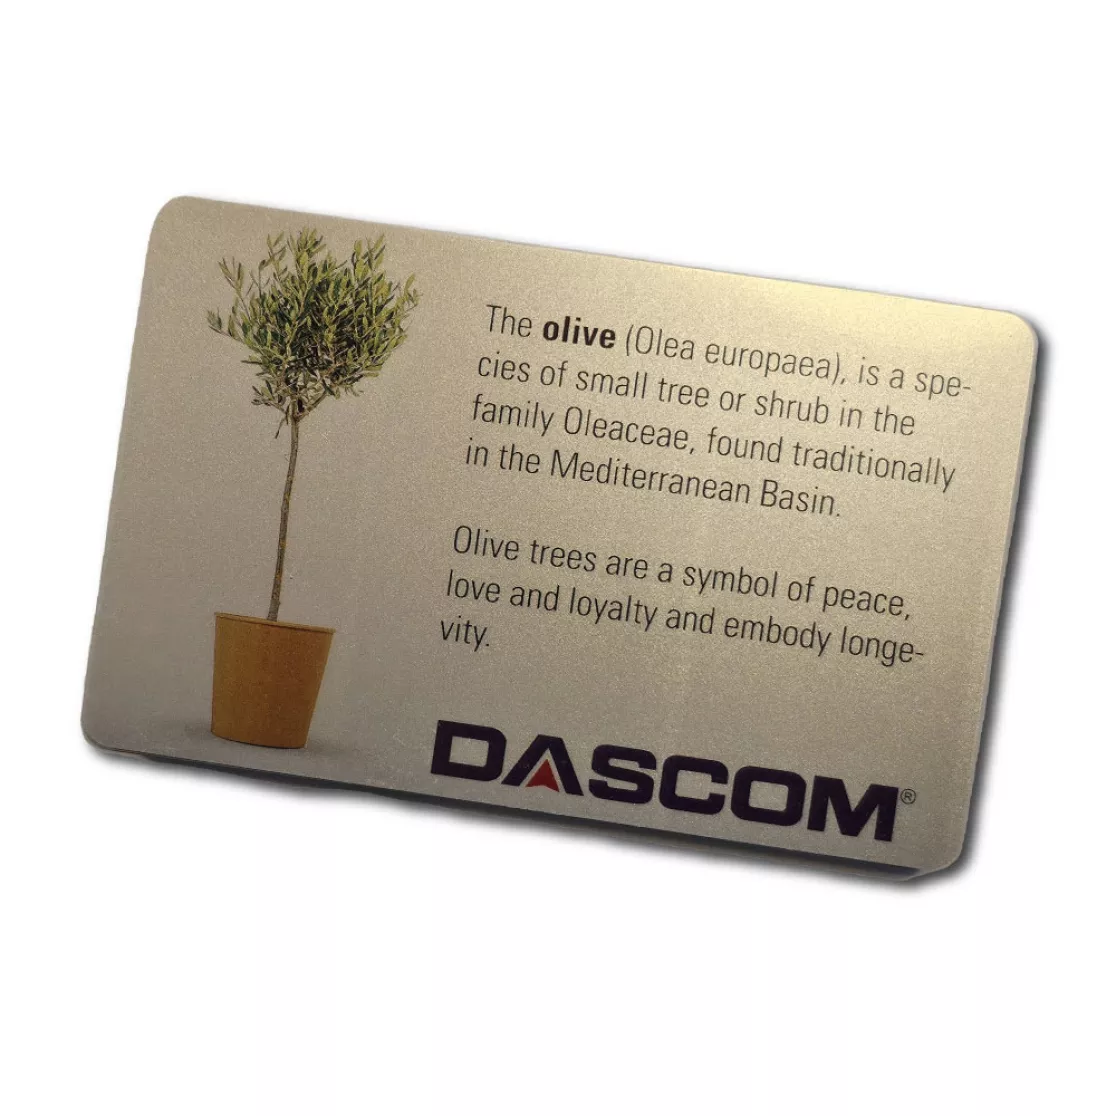 Dascom mit metallic Druck